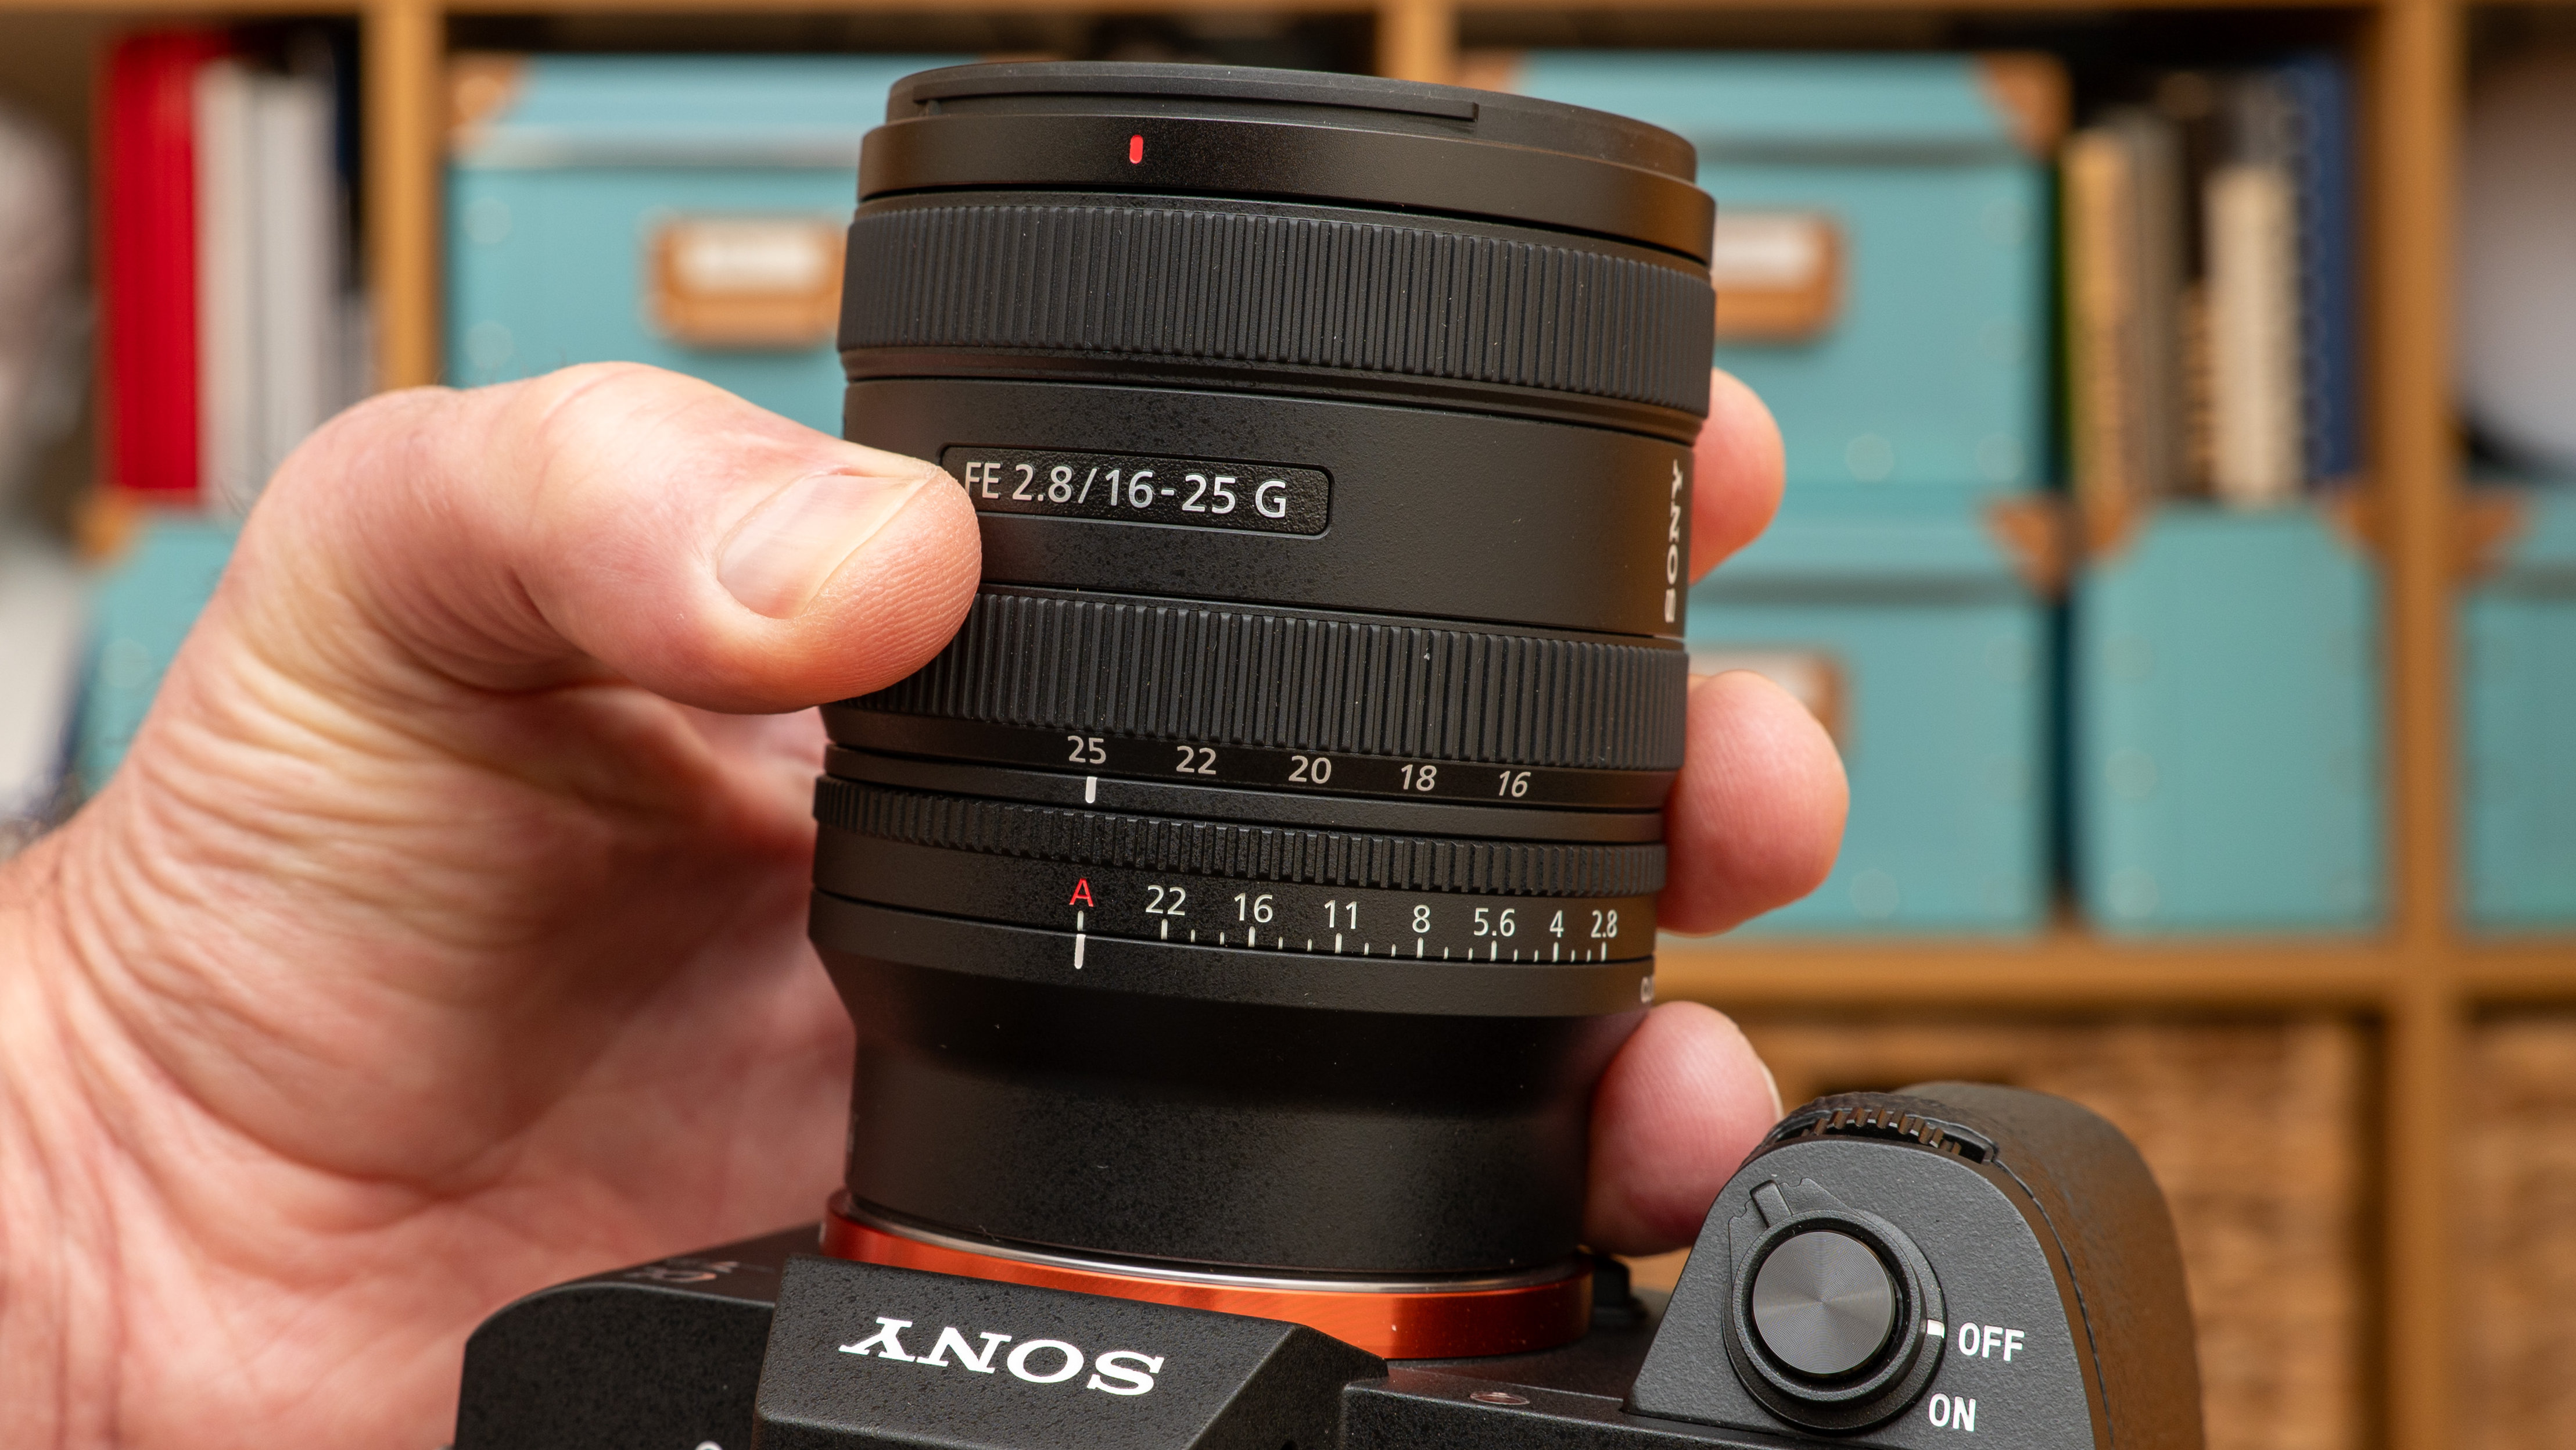 "Mini trinity" lens! Meet the palm-sized Sony 16-25mm f/2.8 G